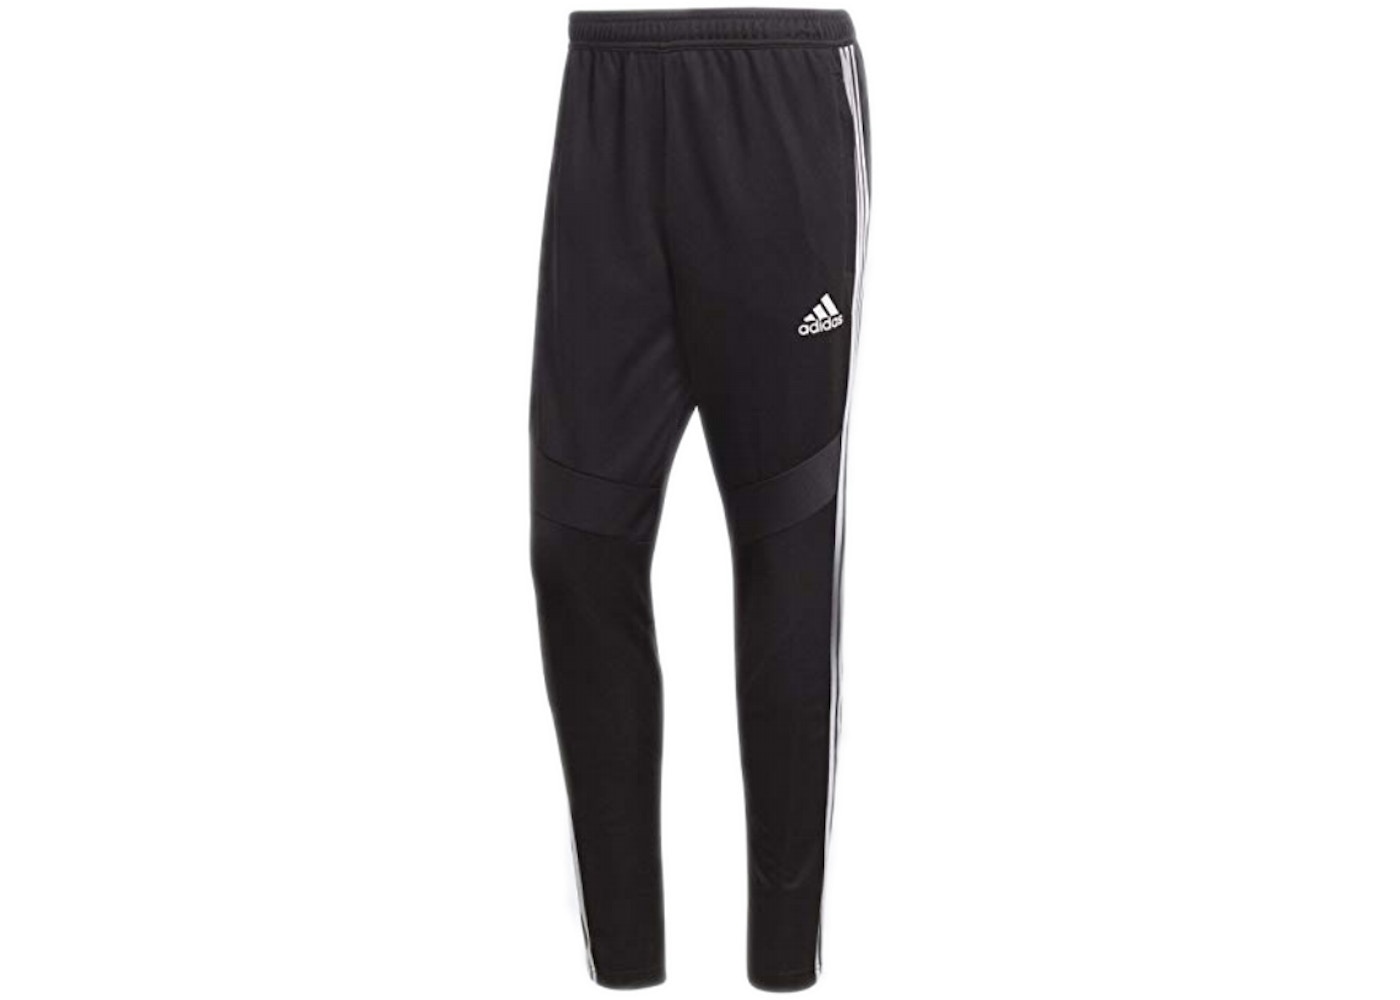 adidas Soccer Tiro 19 Training Pants Black/White - 2019